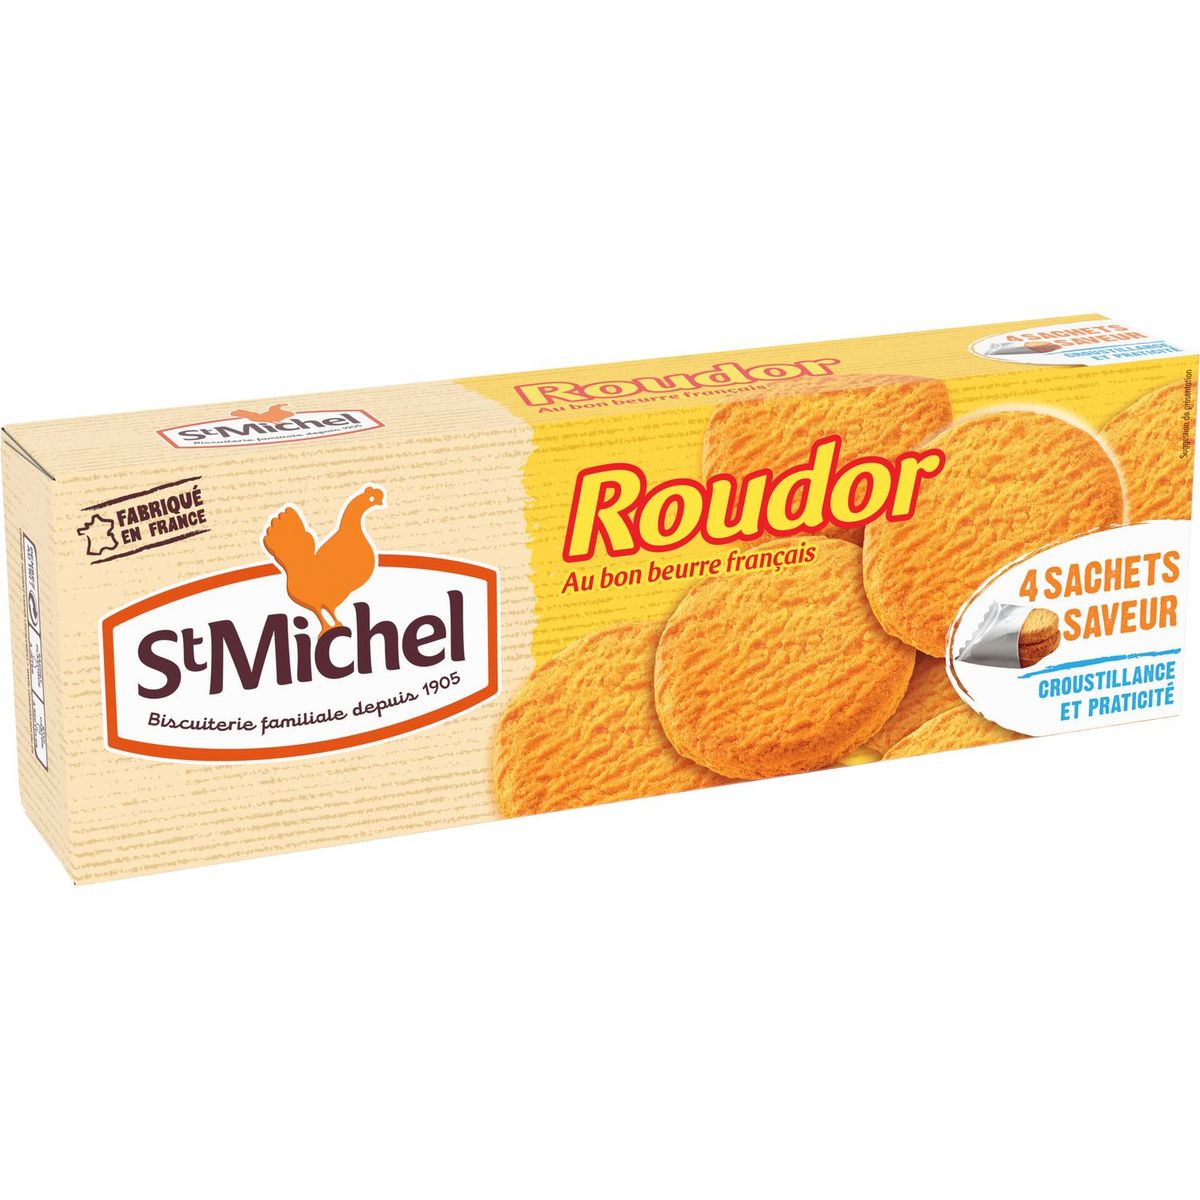 St Michel - Roudor Butter Biscuits, 150g (5.3oz)